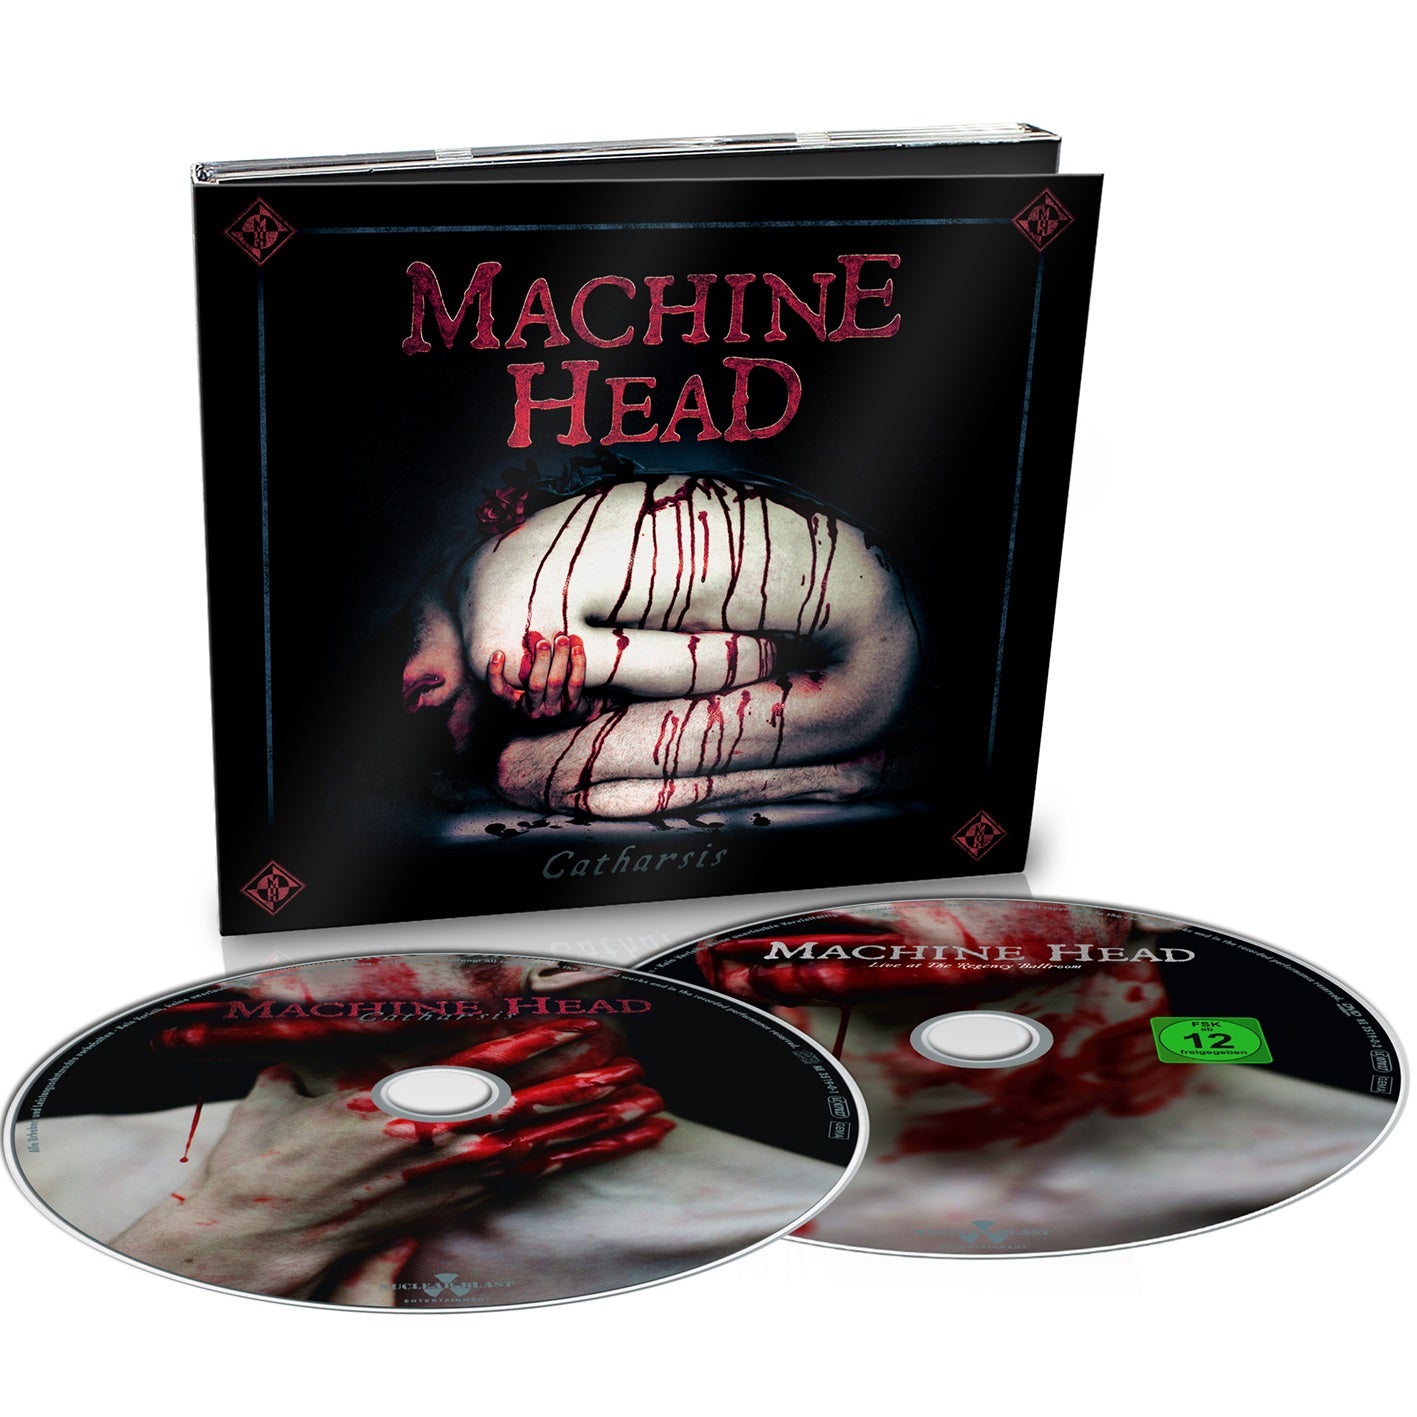 Machine Head "Catharsis" Digipak CD/DVD